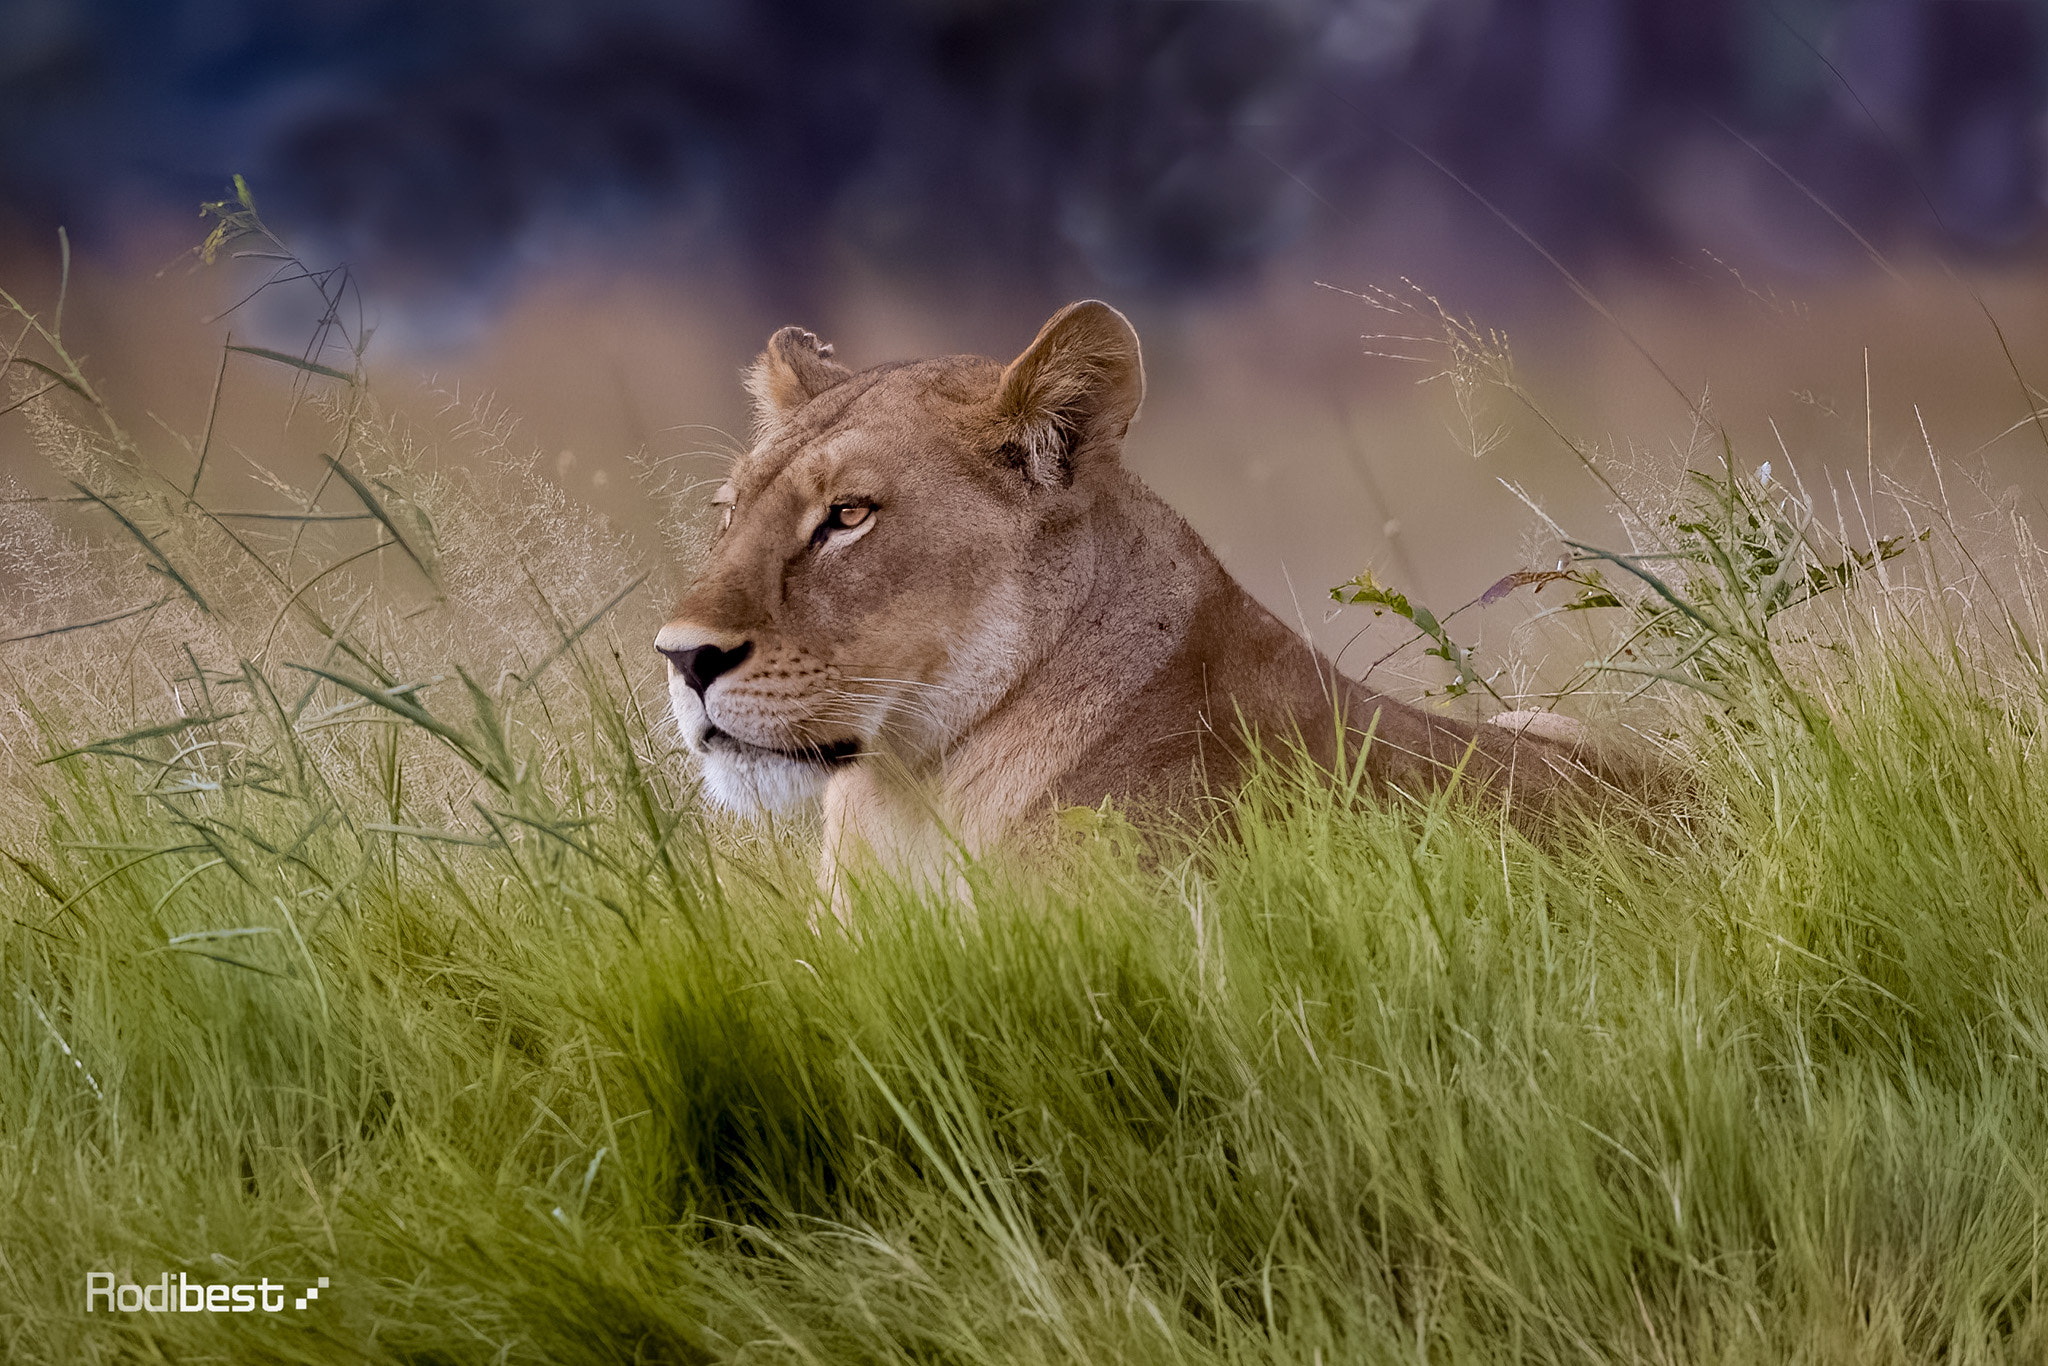 General 2048x1366 Rodi Almog lion field looking away wind animals feline outdoors grass nature watermarked